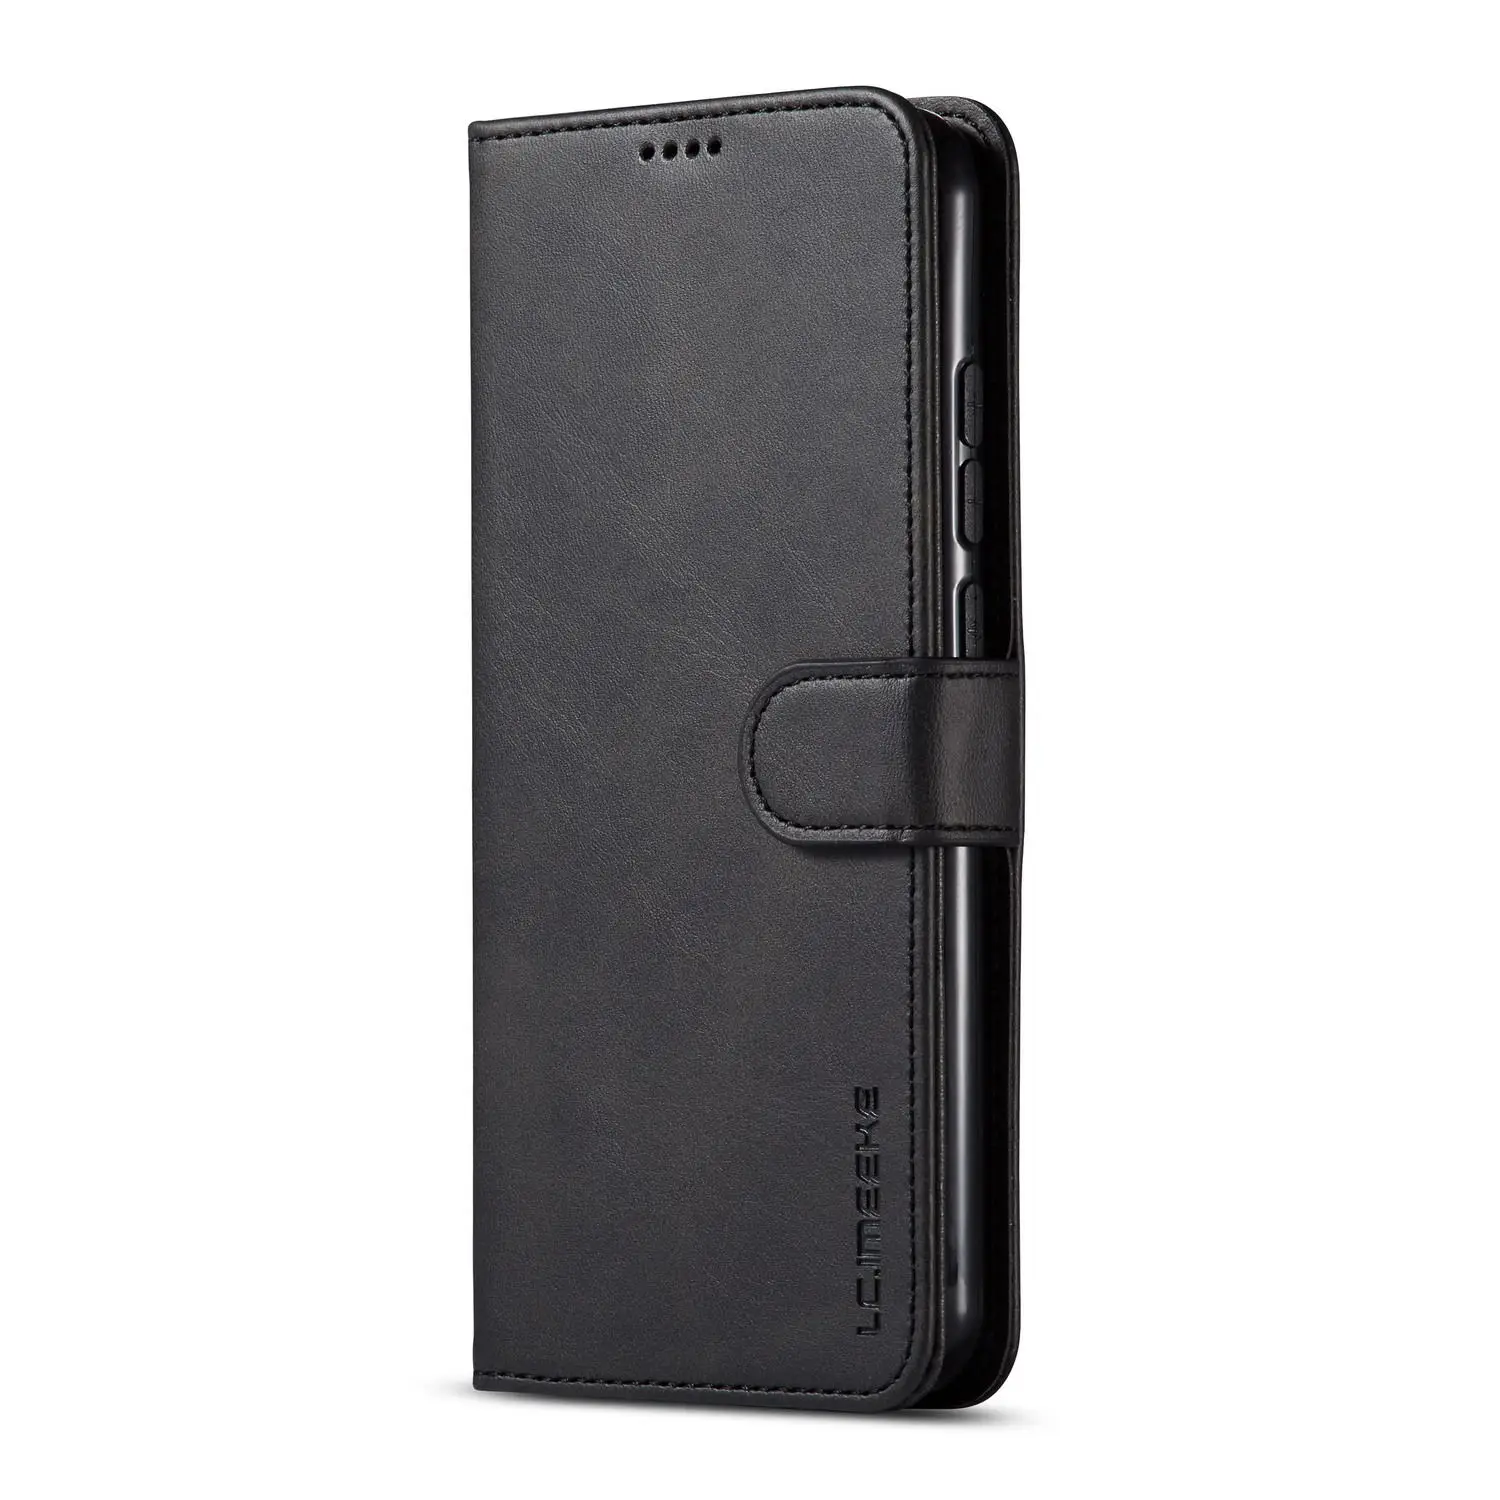 Чехол для Redmi Note 8 T, чехол для Xiaomi Redmi Note 8 Pro, кожаный флип-кошелек, чехол для телефона для Xiaomi Redmi 8A, чехол для Redmi 8, чехол - Цвет: black